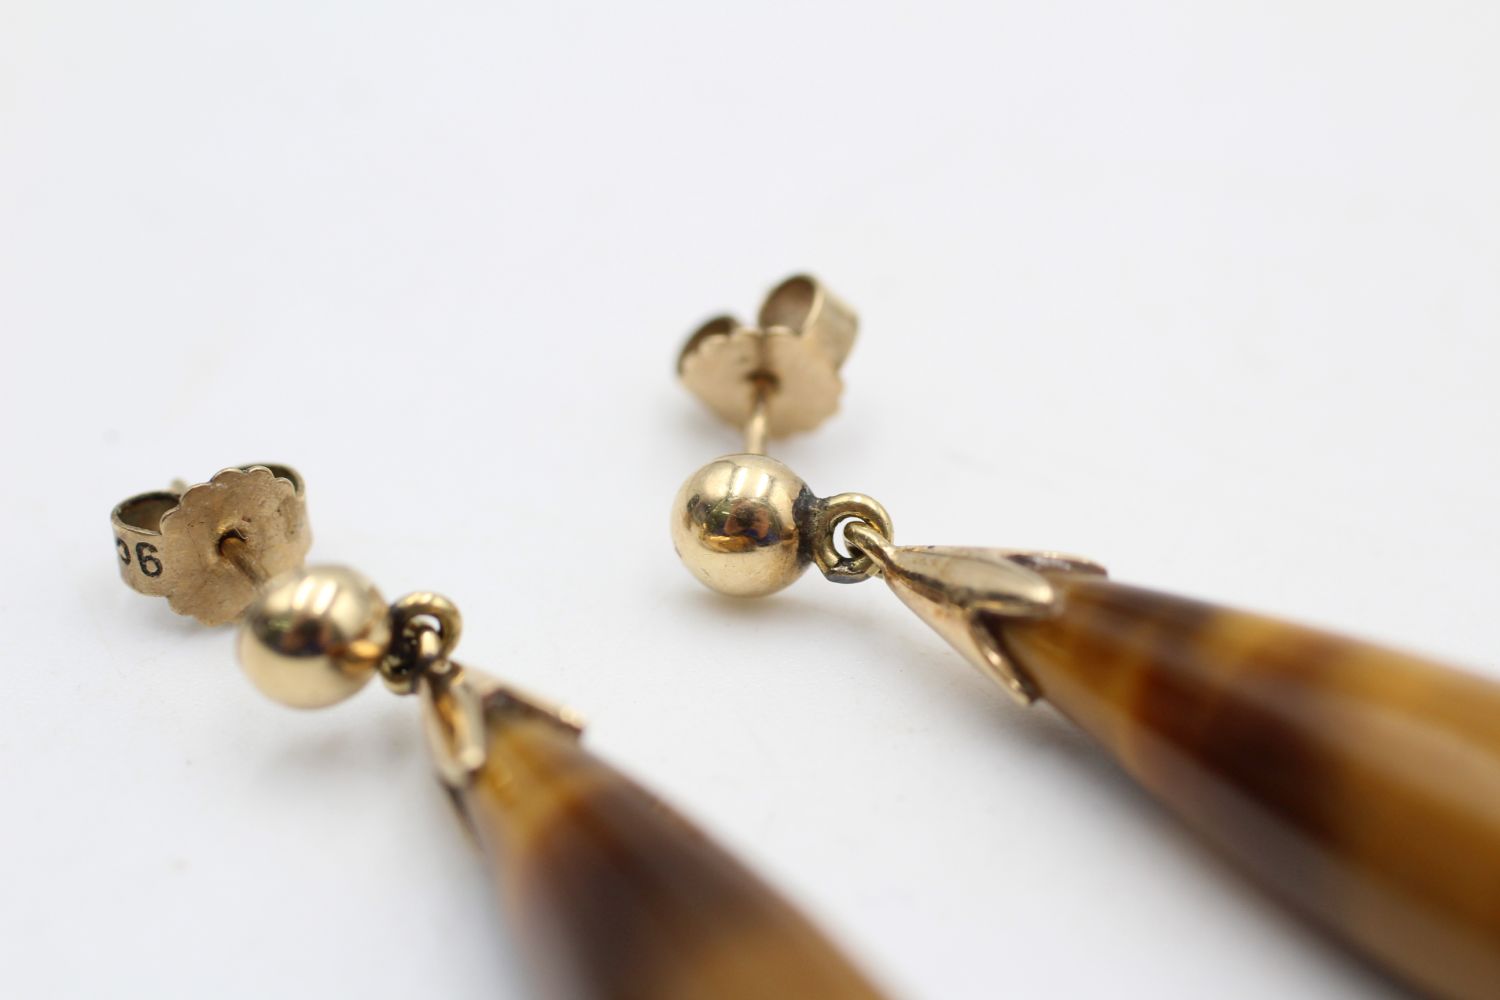 9ct gold vintage tiger's eye drop earrings (8.3g) - Image 3 of 5